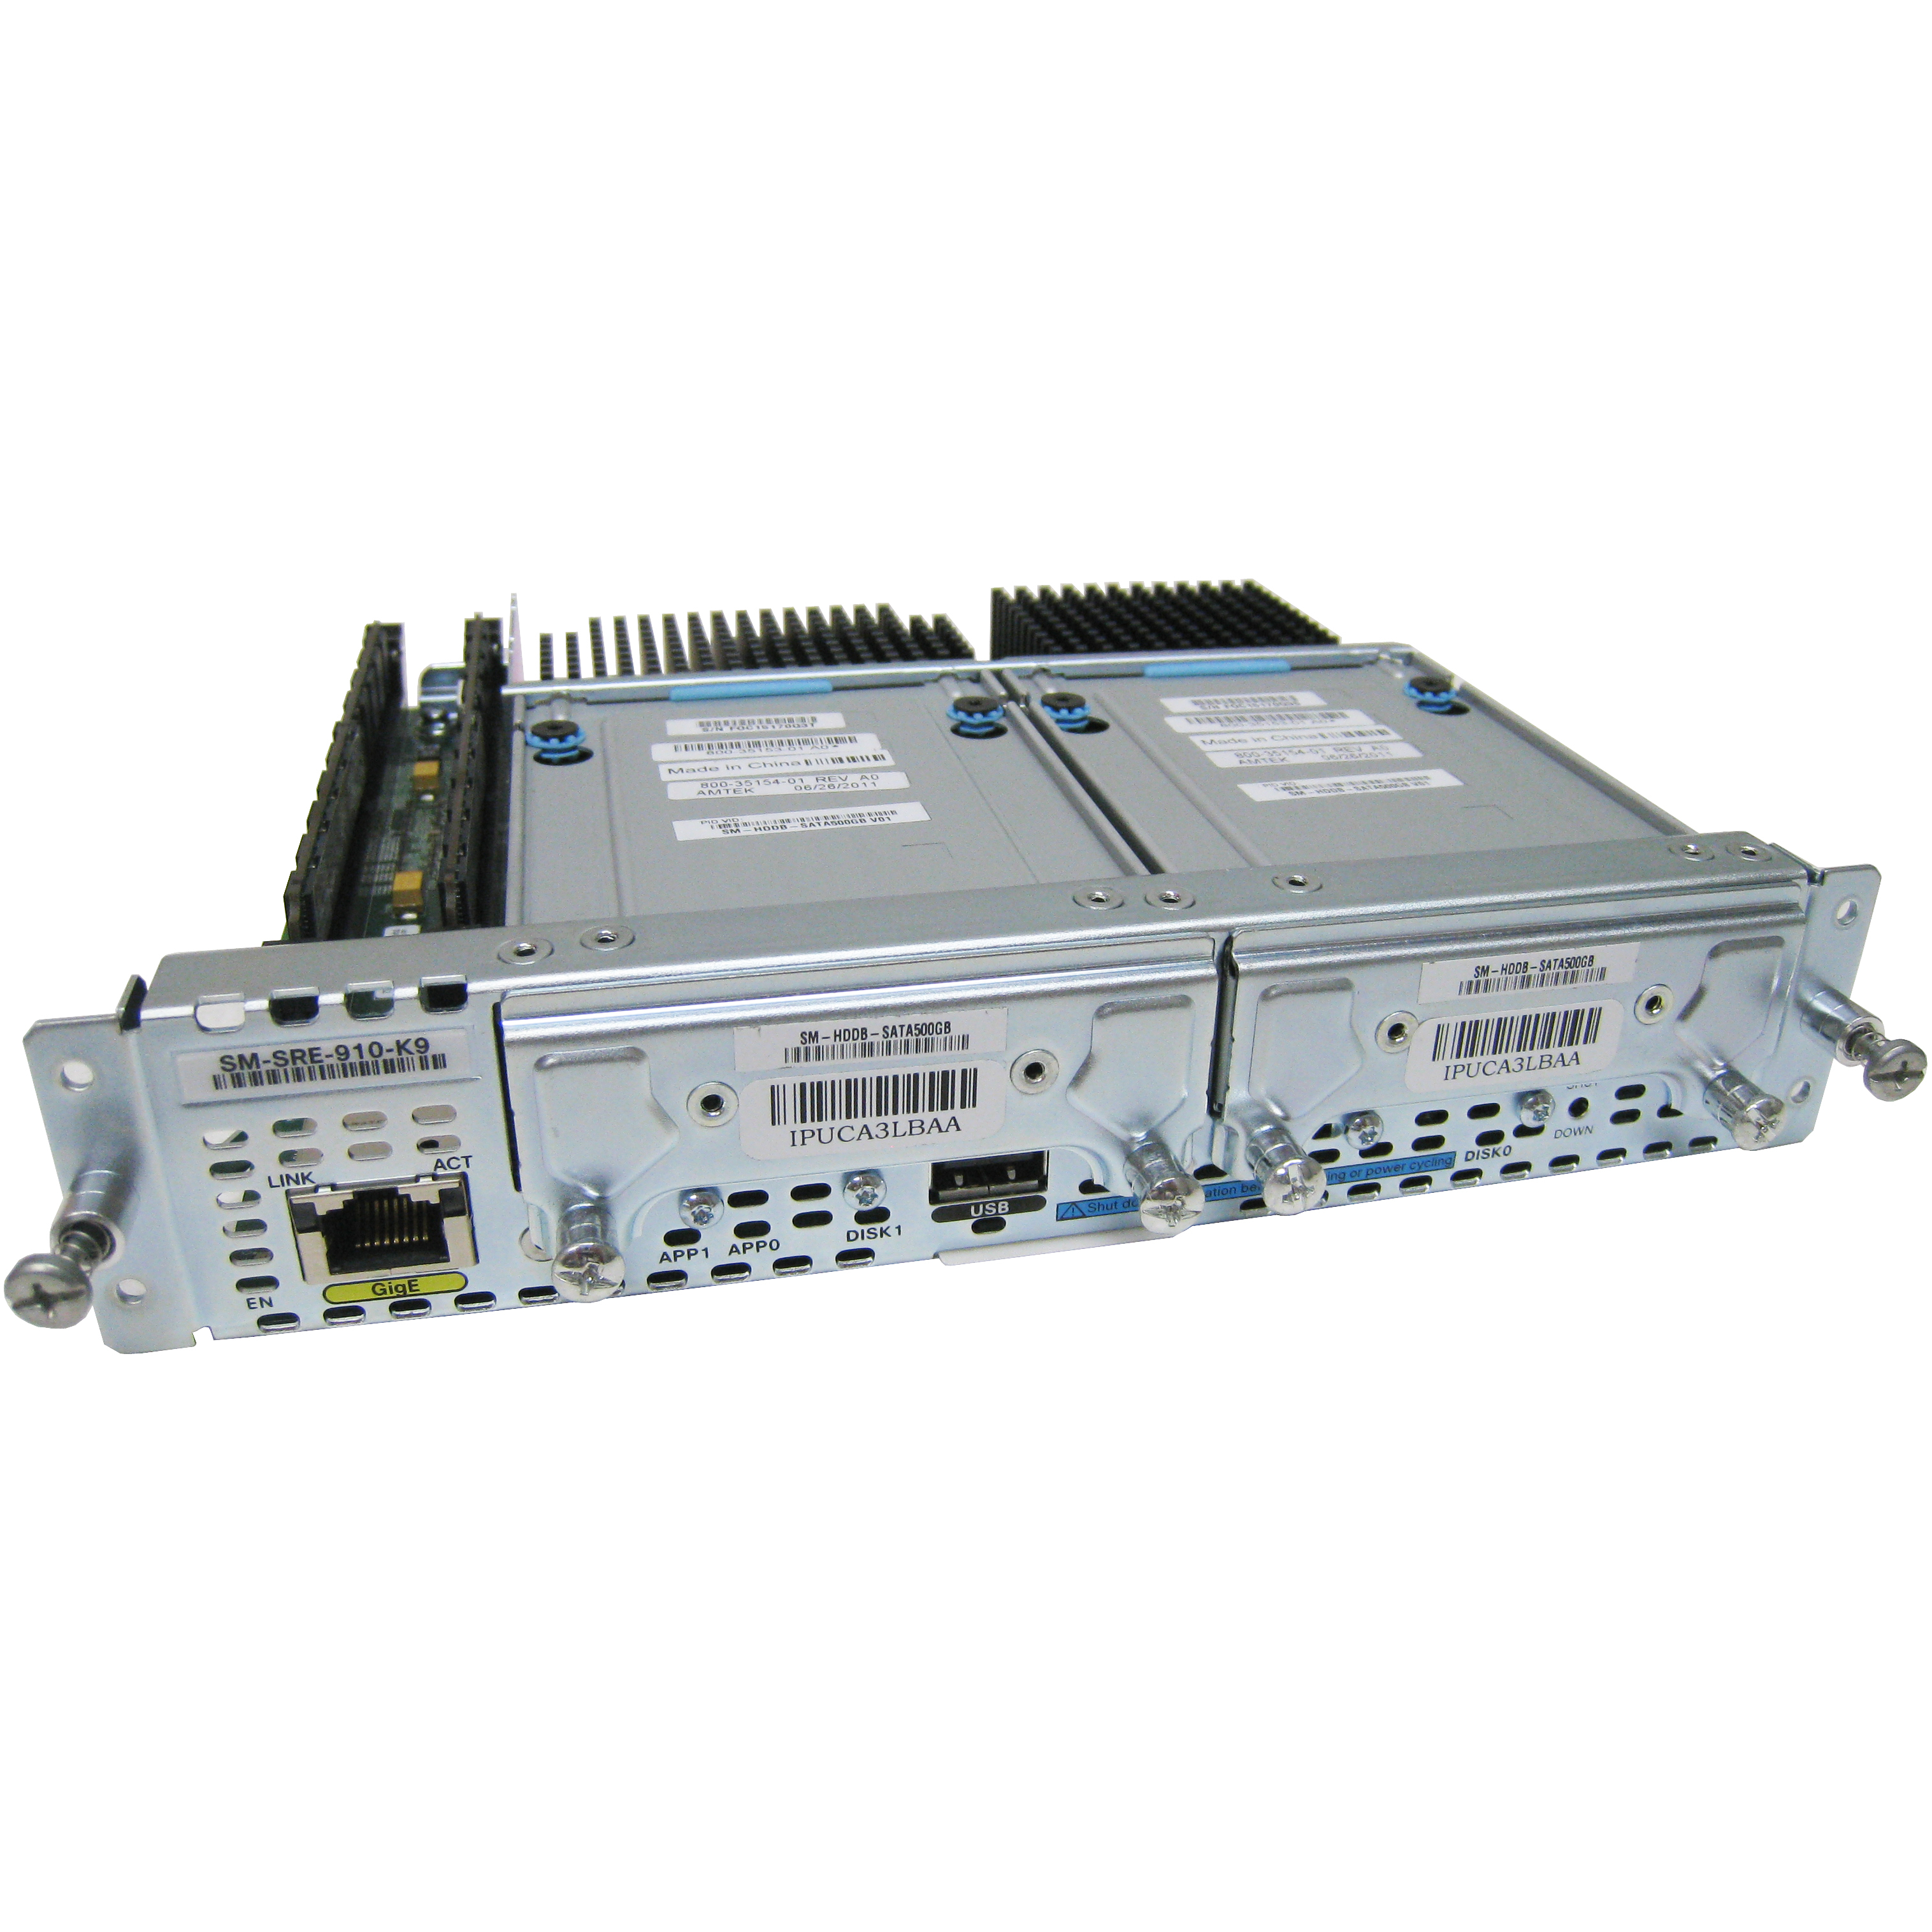 Cisco SM-SRE-910-K9